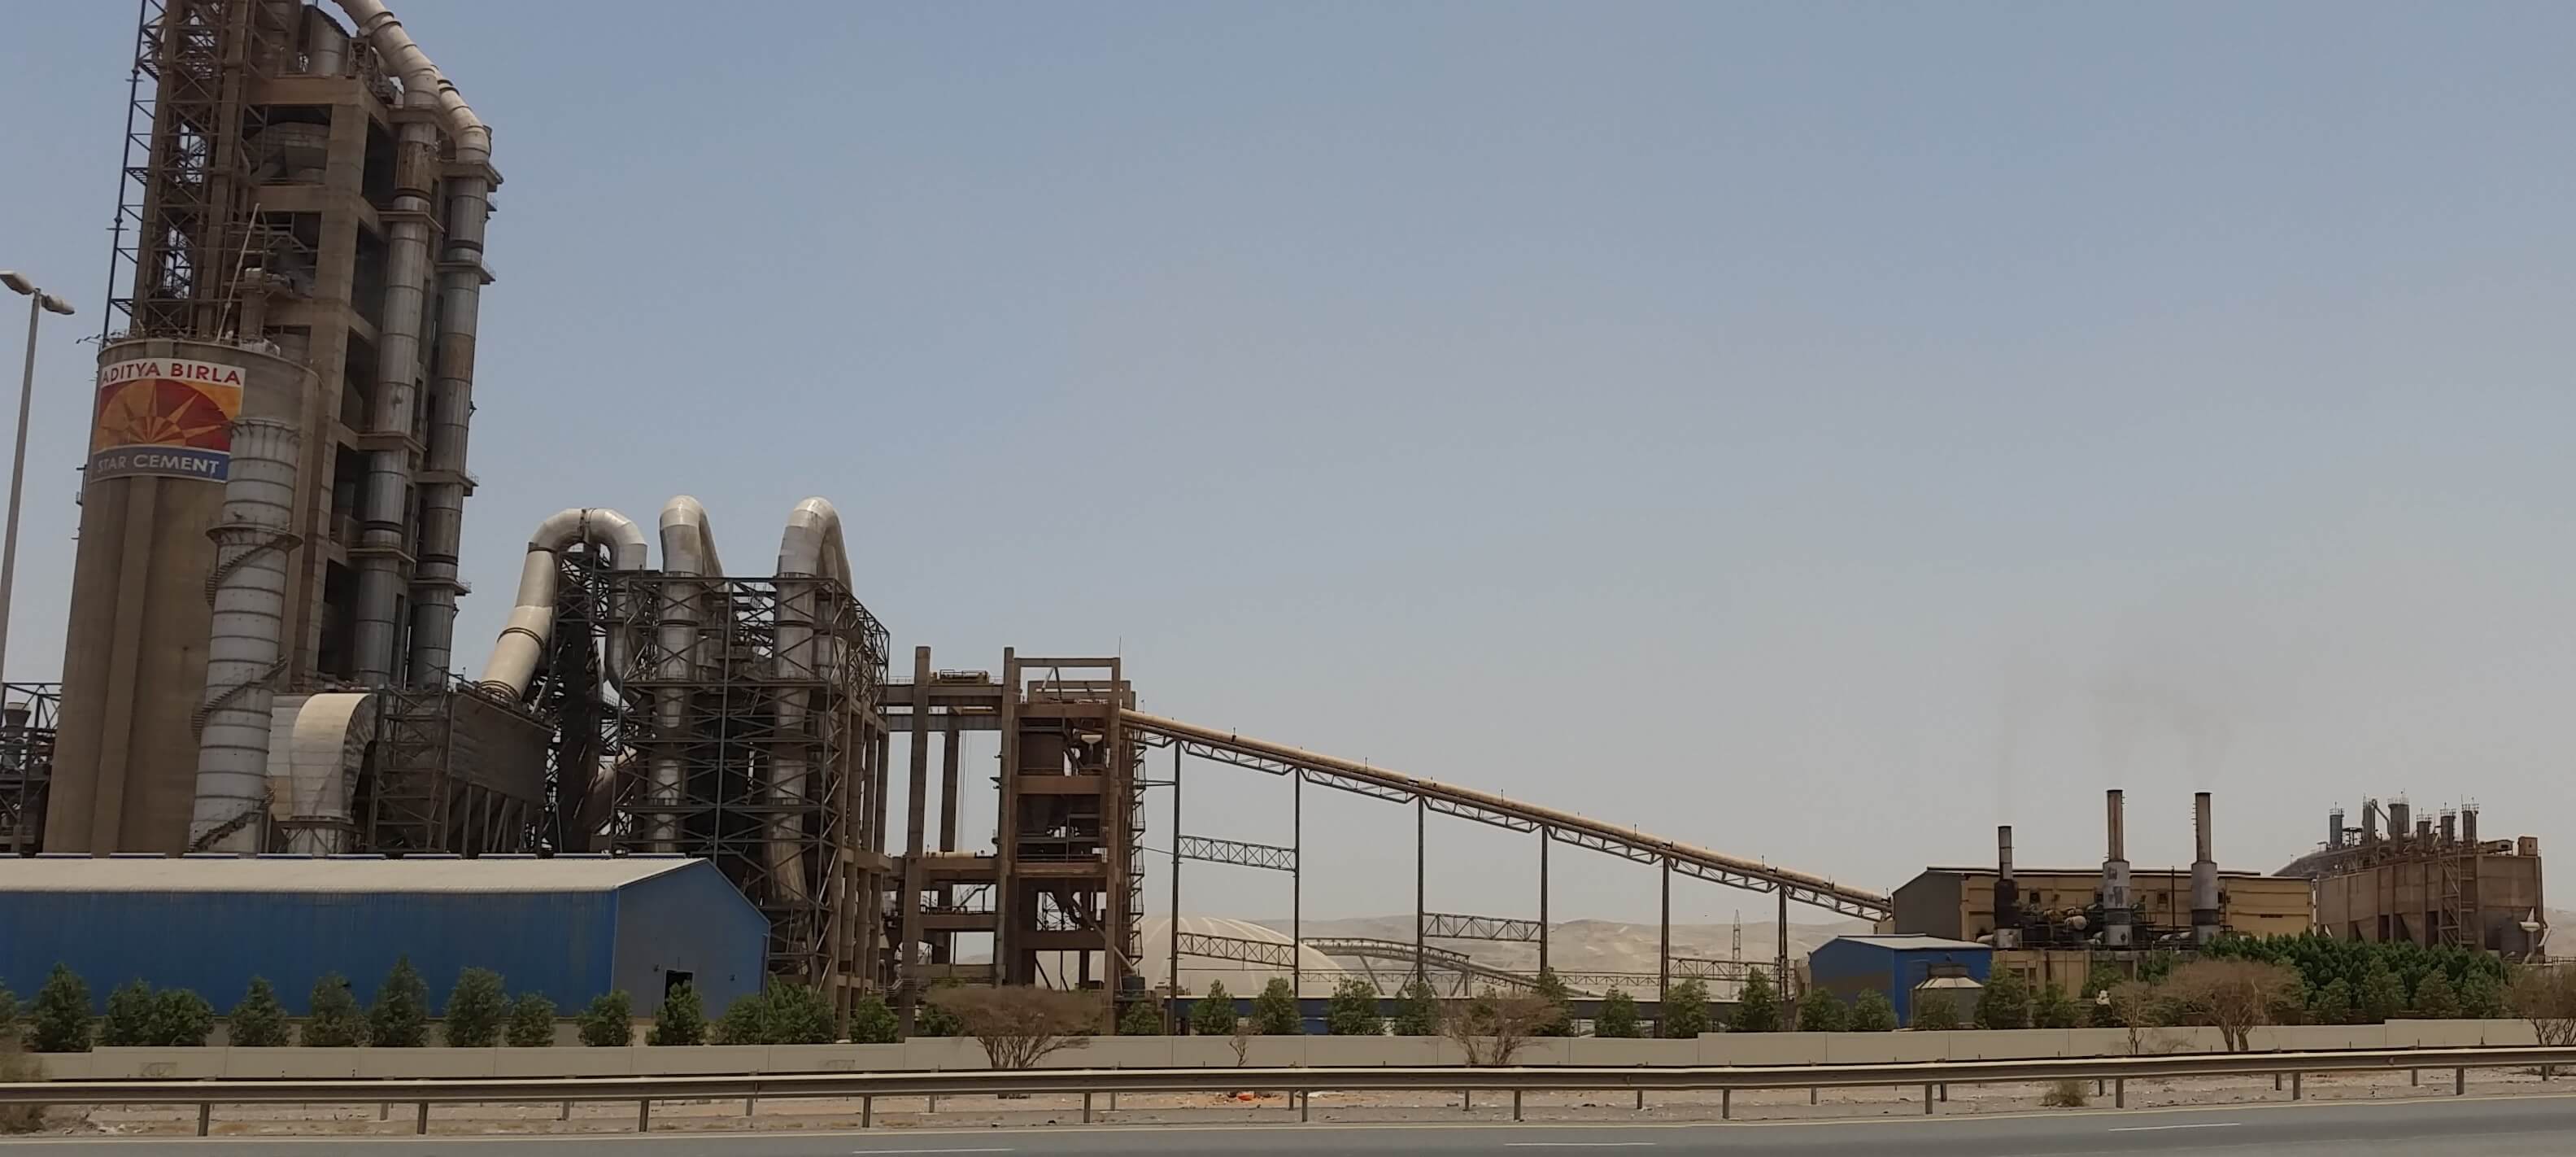 Star Cement Plant - Ras al-Khaimah